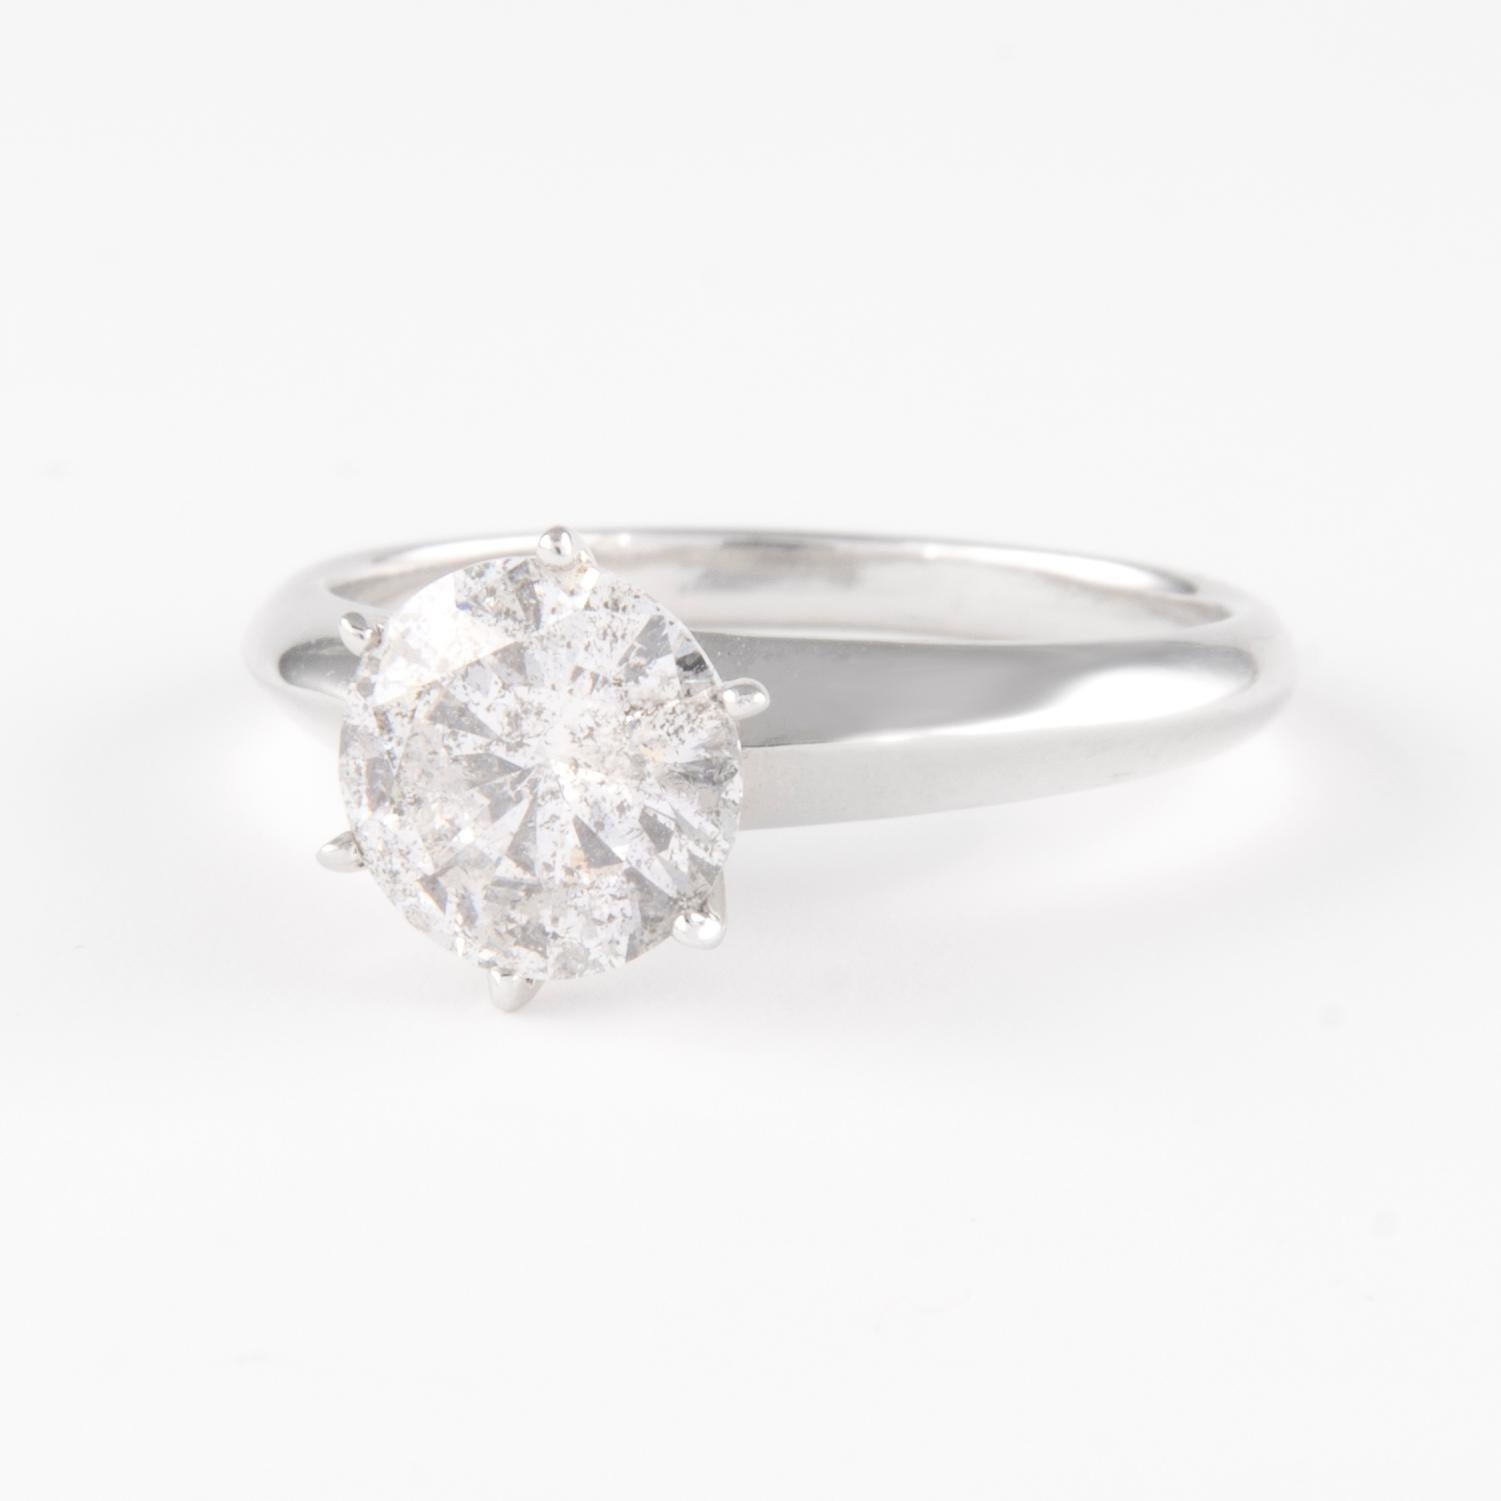 1.68 carat diamond ring